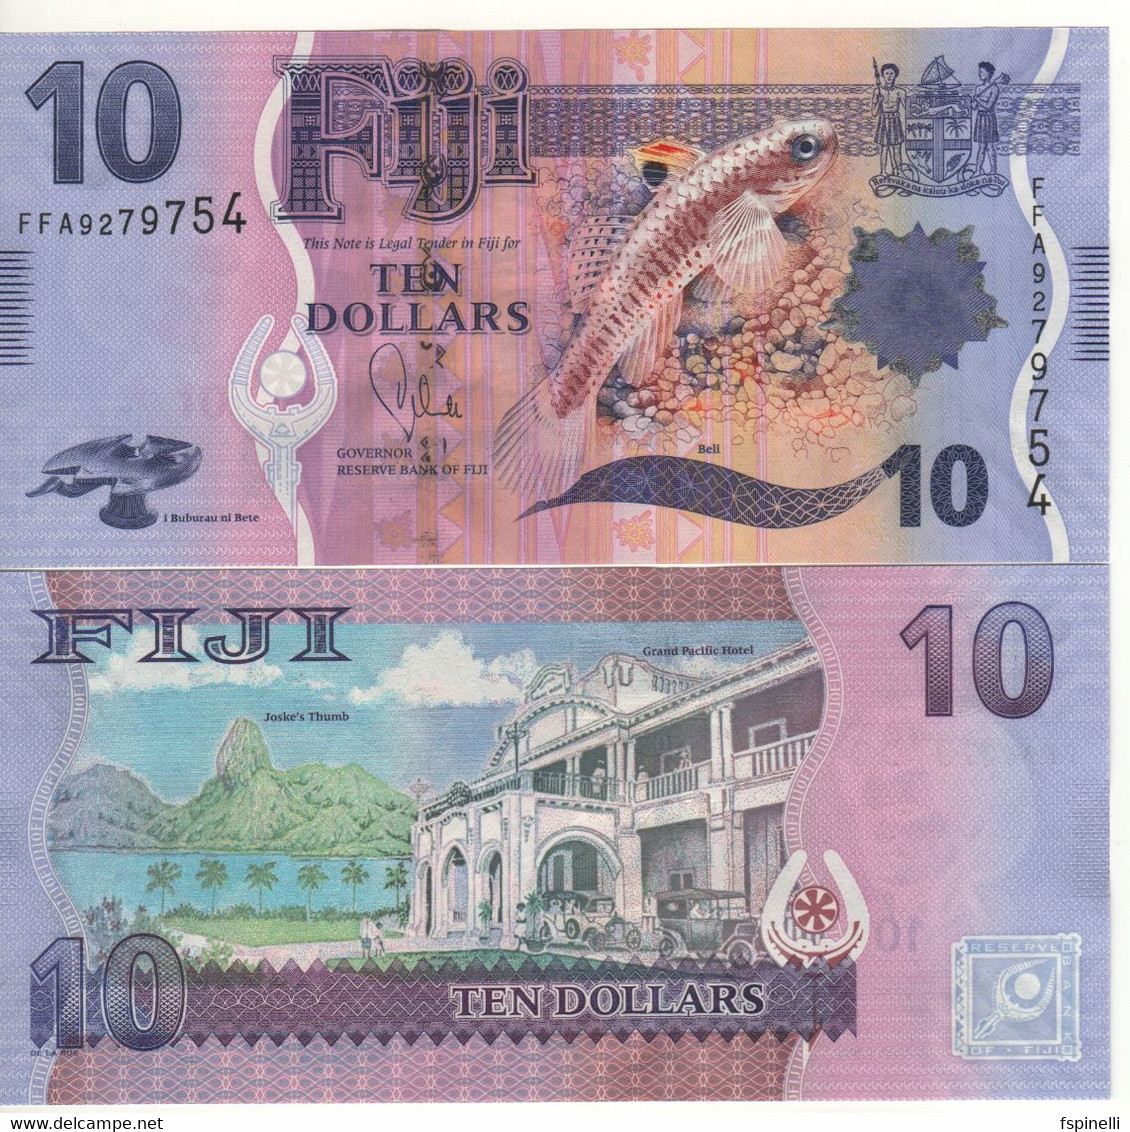 FIJI   10 Dollars P116   (ND 2012 )   Beli Fish On Front - Gran Pacific Hotel On Back   UNC - Fiji